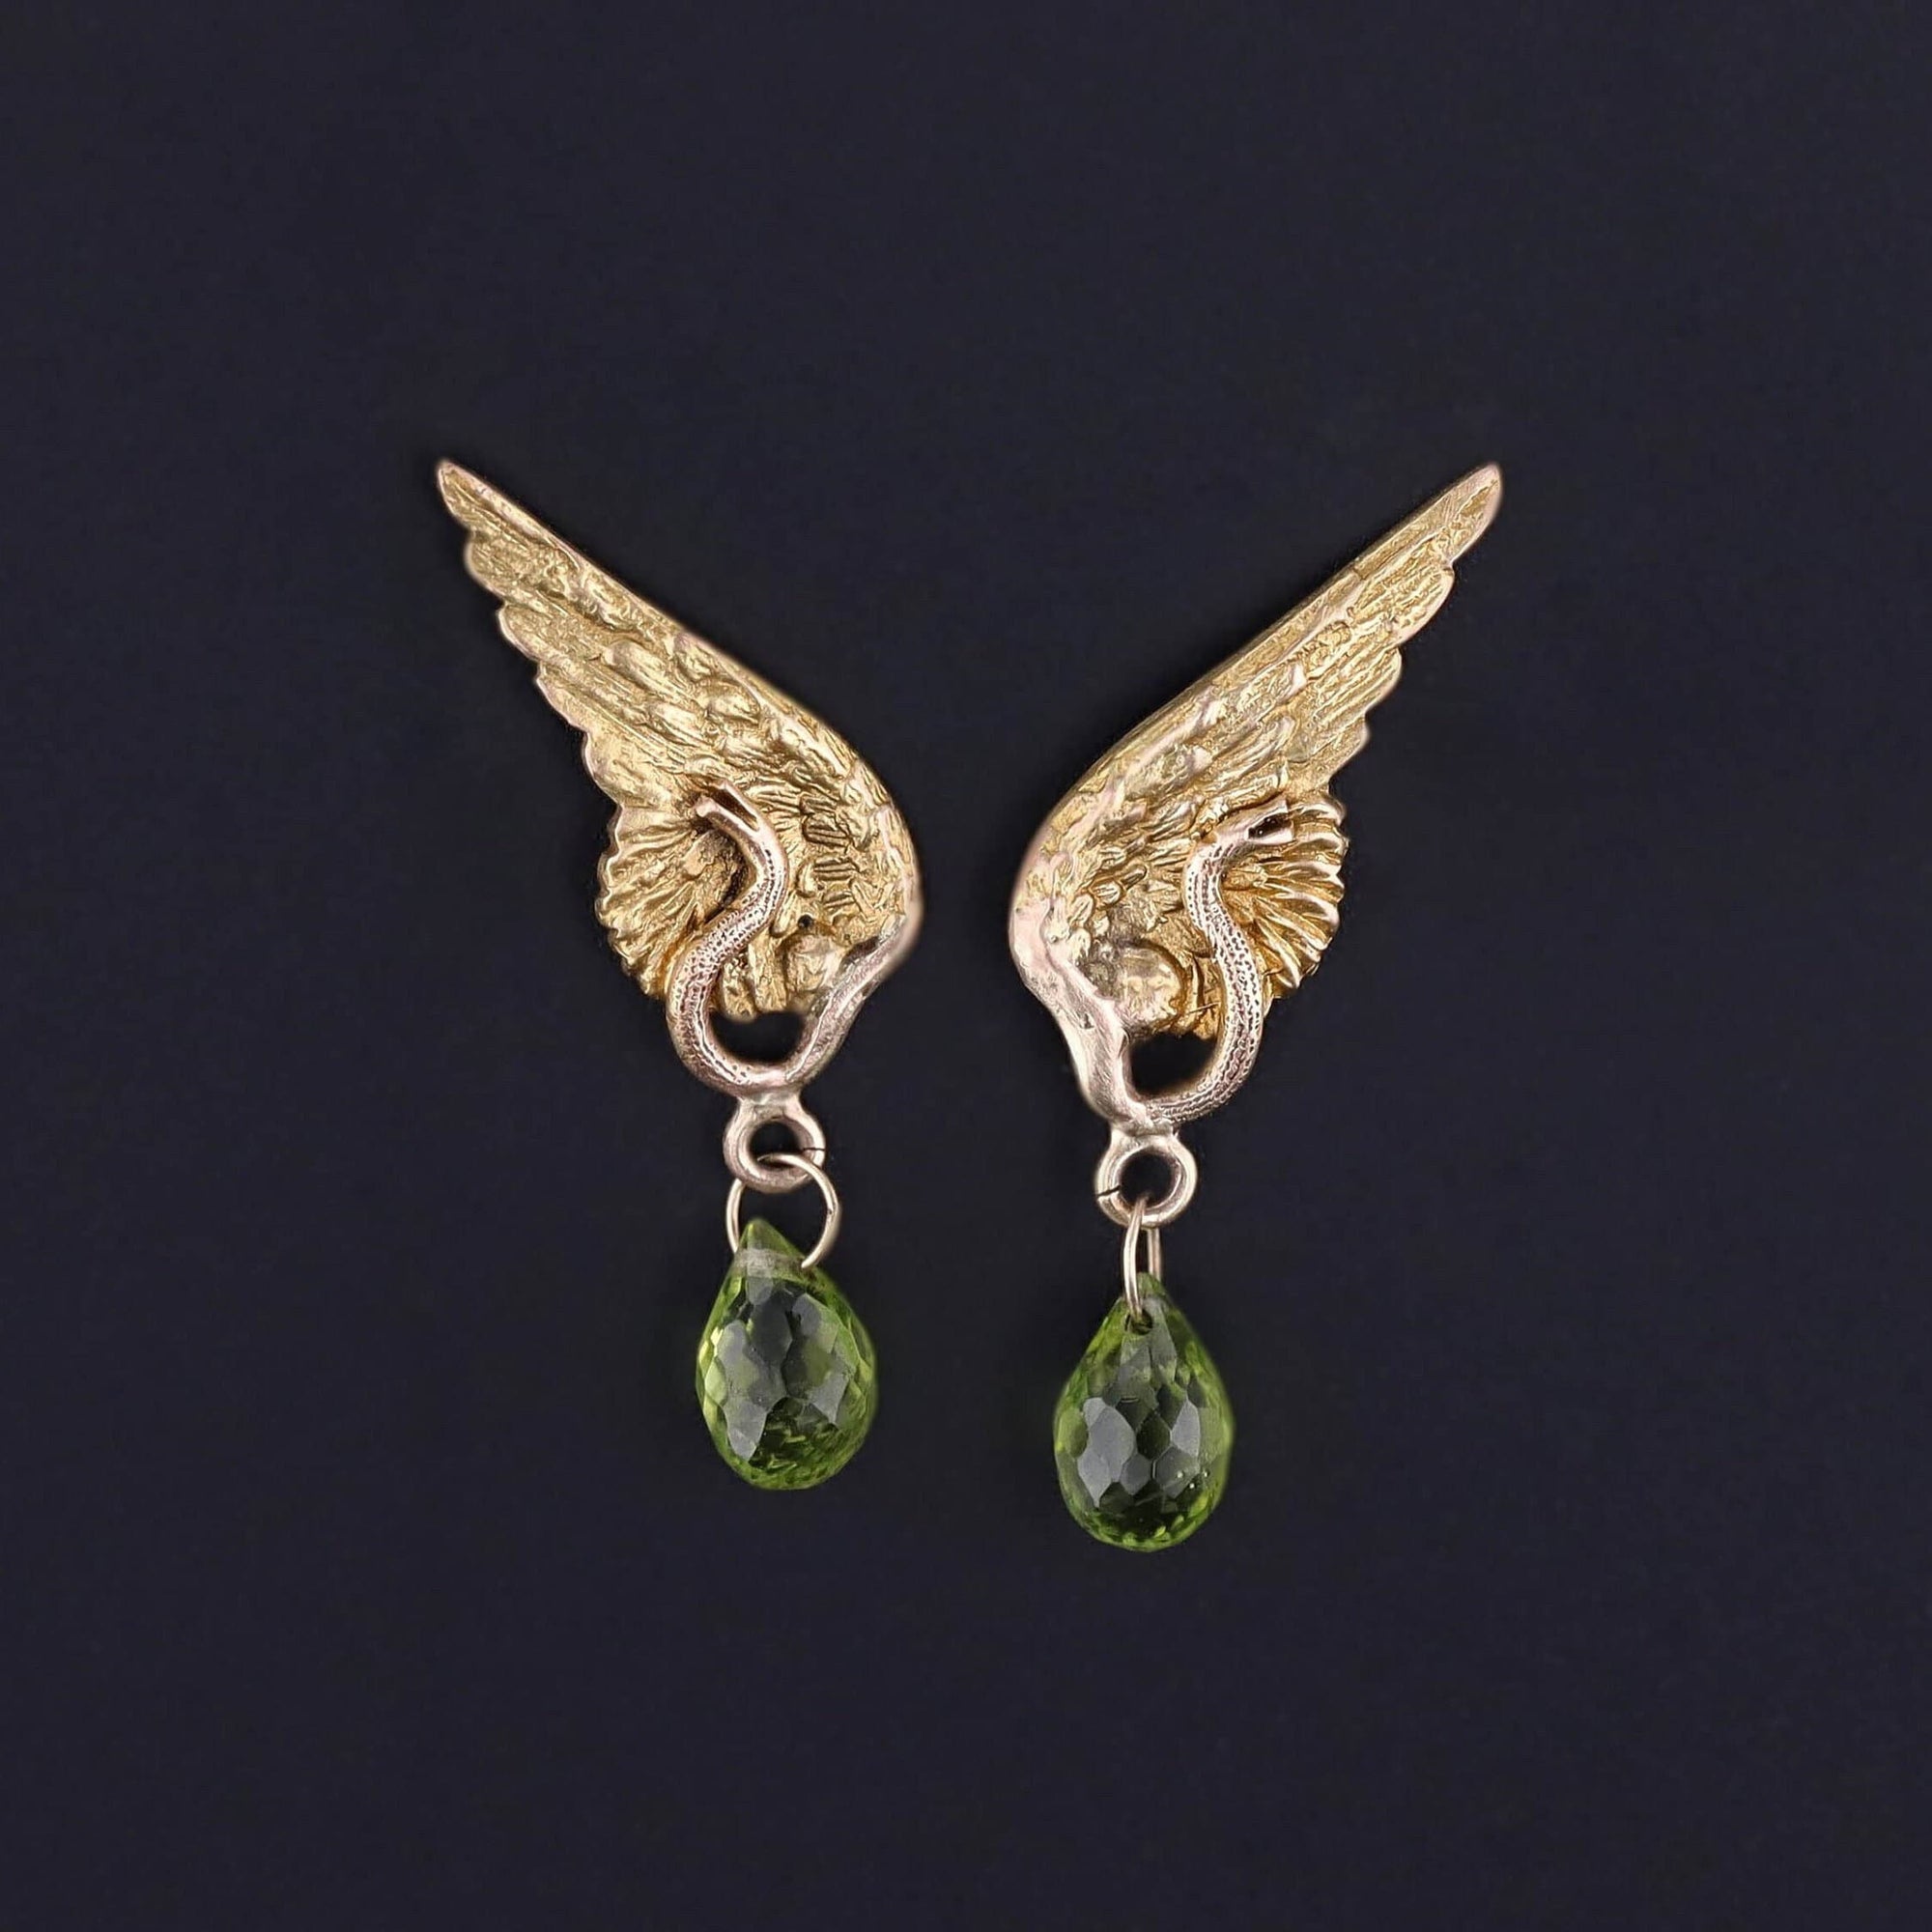 Antique Wing Earrings of 14k Gold